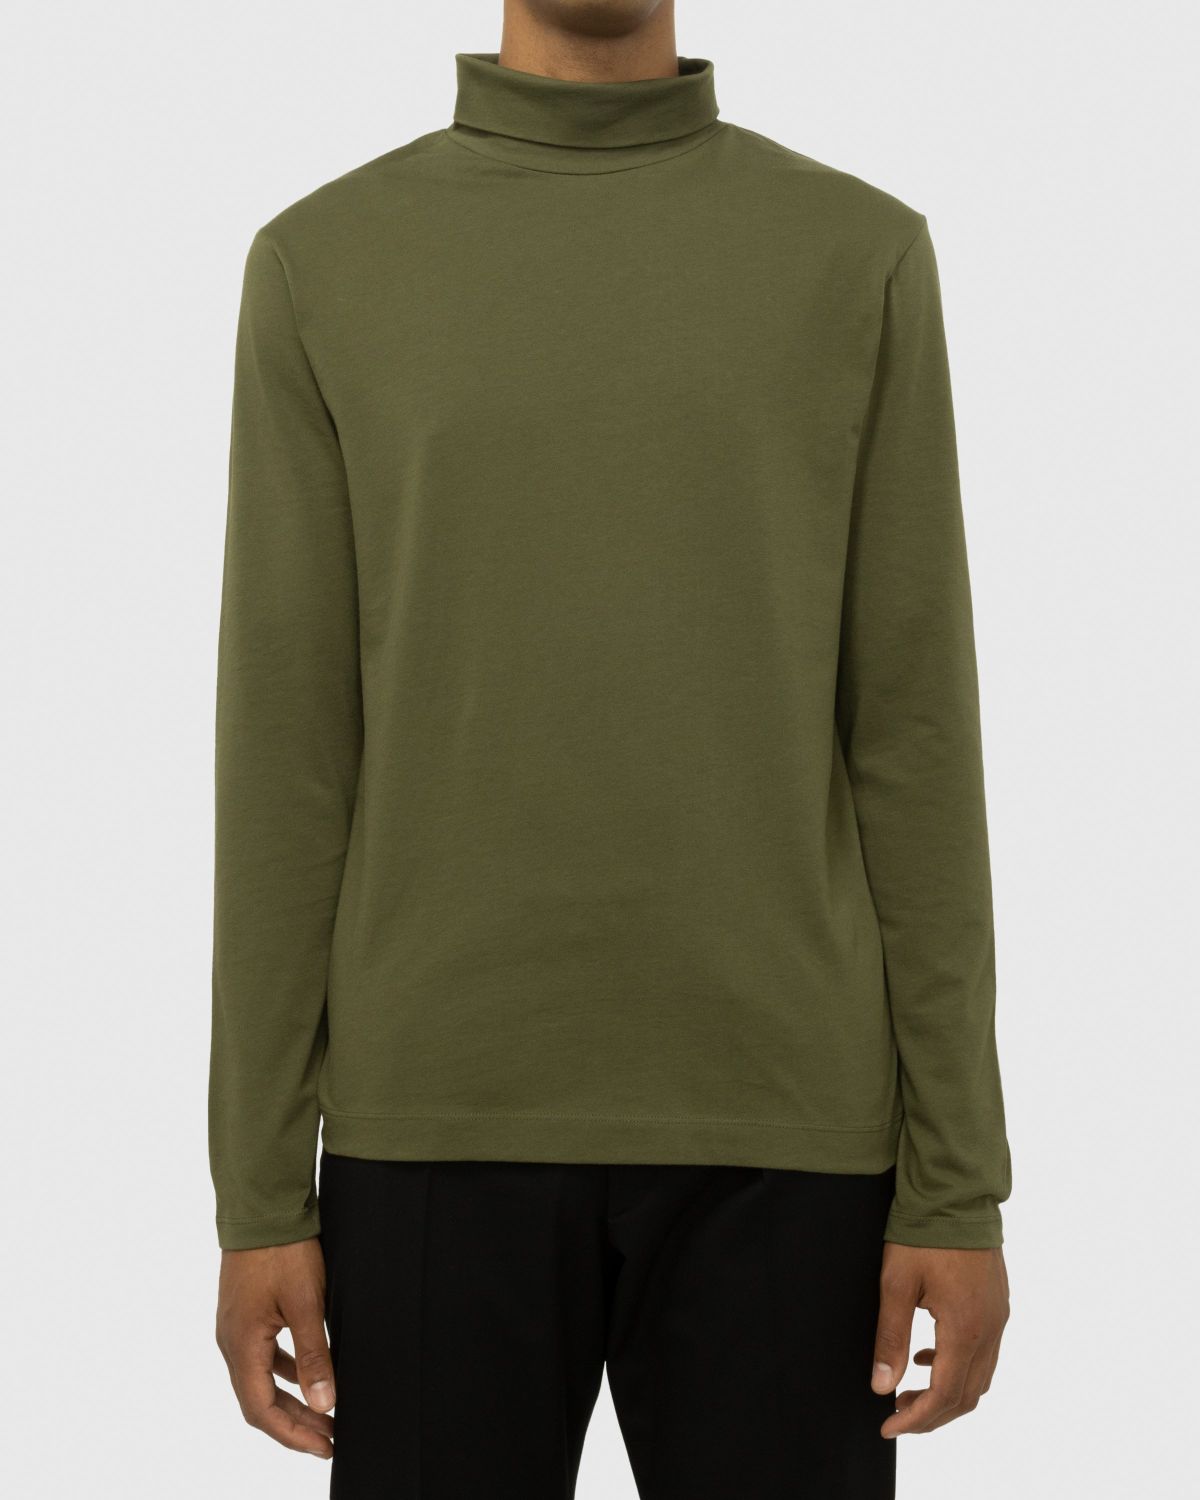 Dries van Noten – Heyzo Turtleneck Jersey Shirt Green - Turtlenecks - Green - Image 4